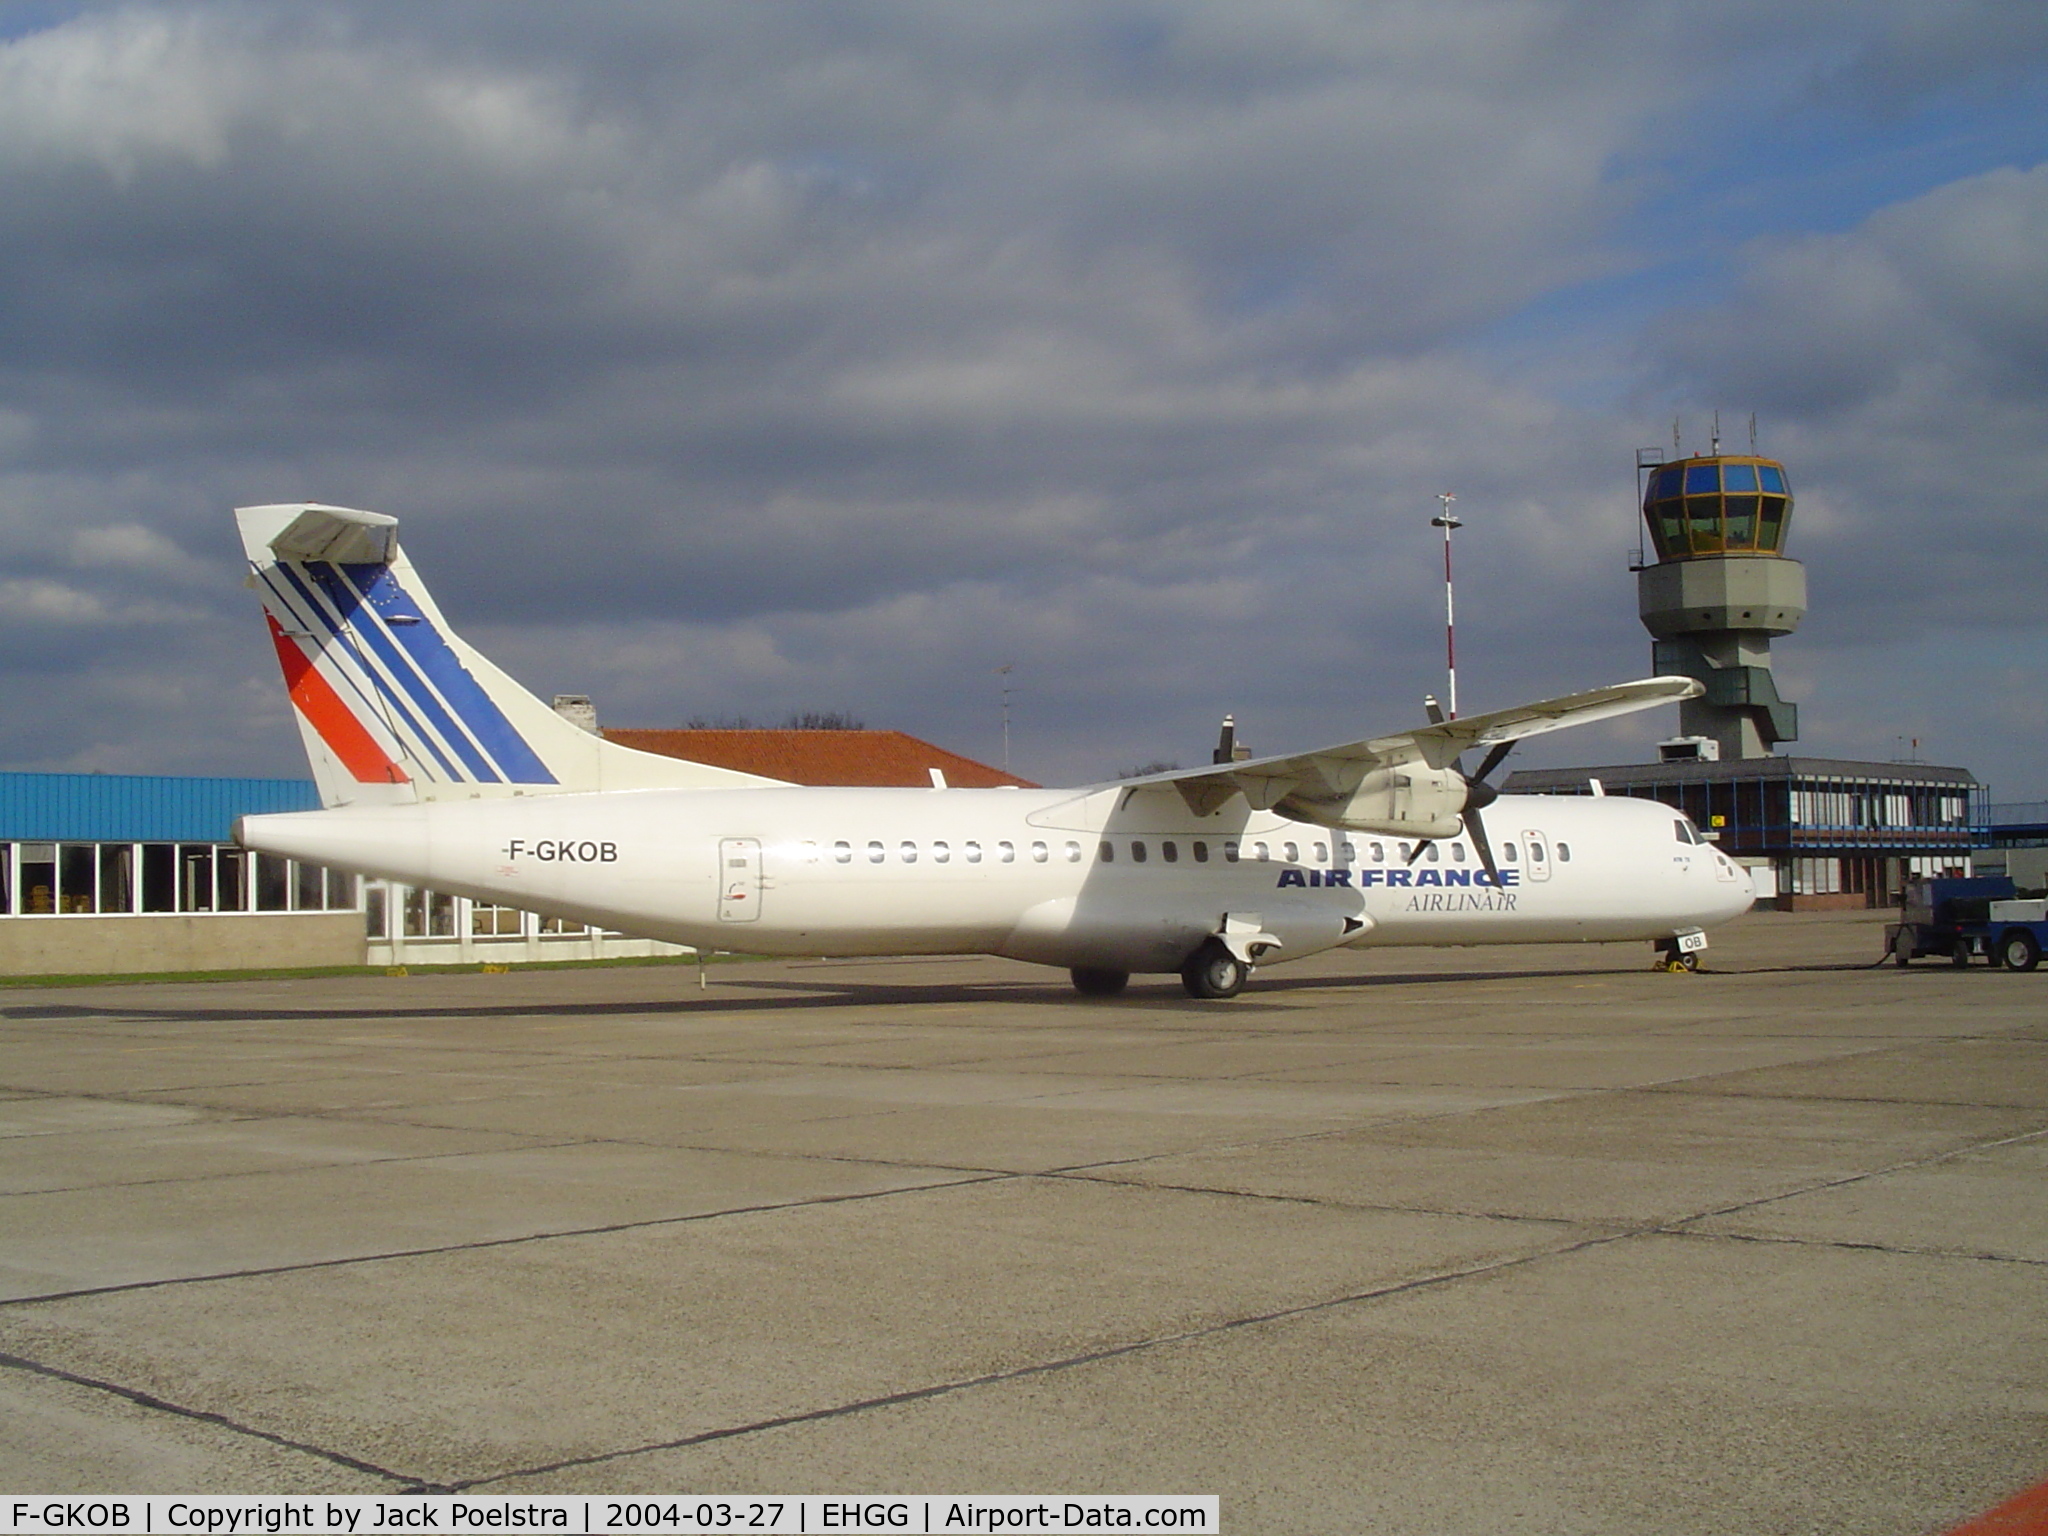 F-GKOB, 1991 ATR 72-202 C/N 232, F-GKOB in Air France colours at Groningen airport